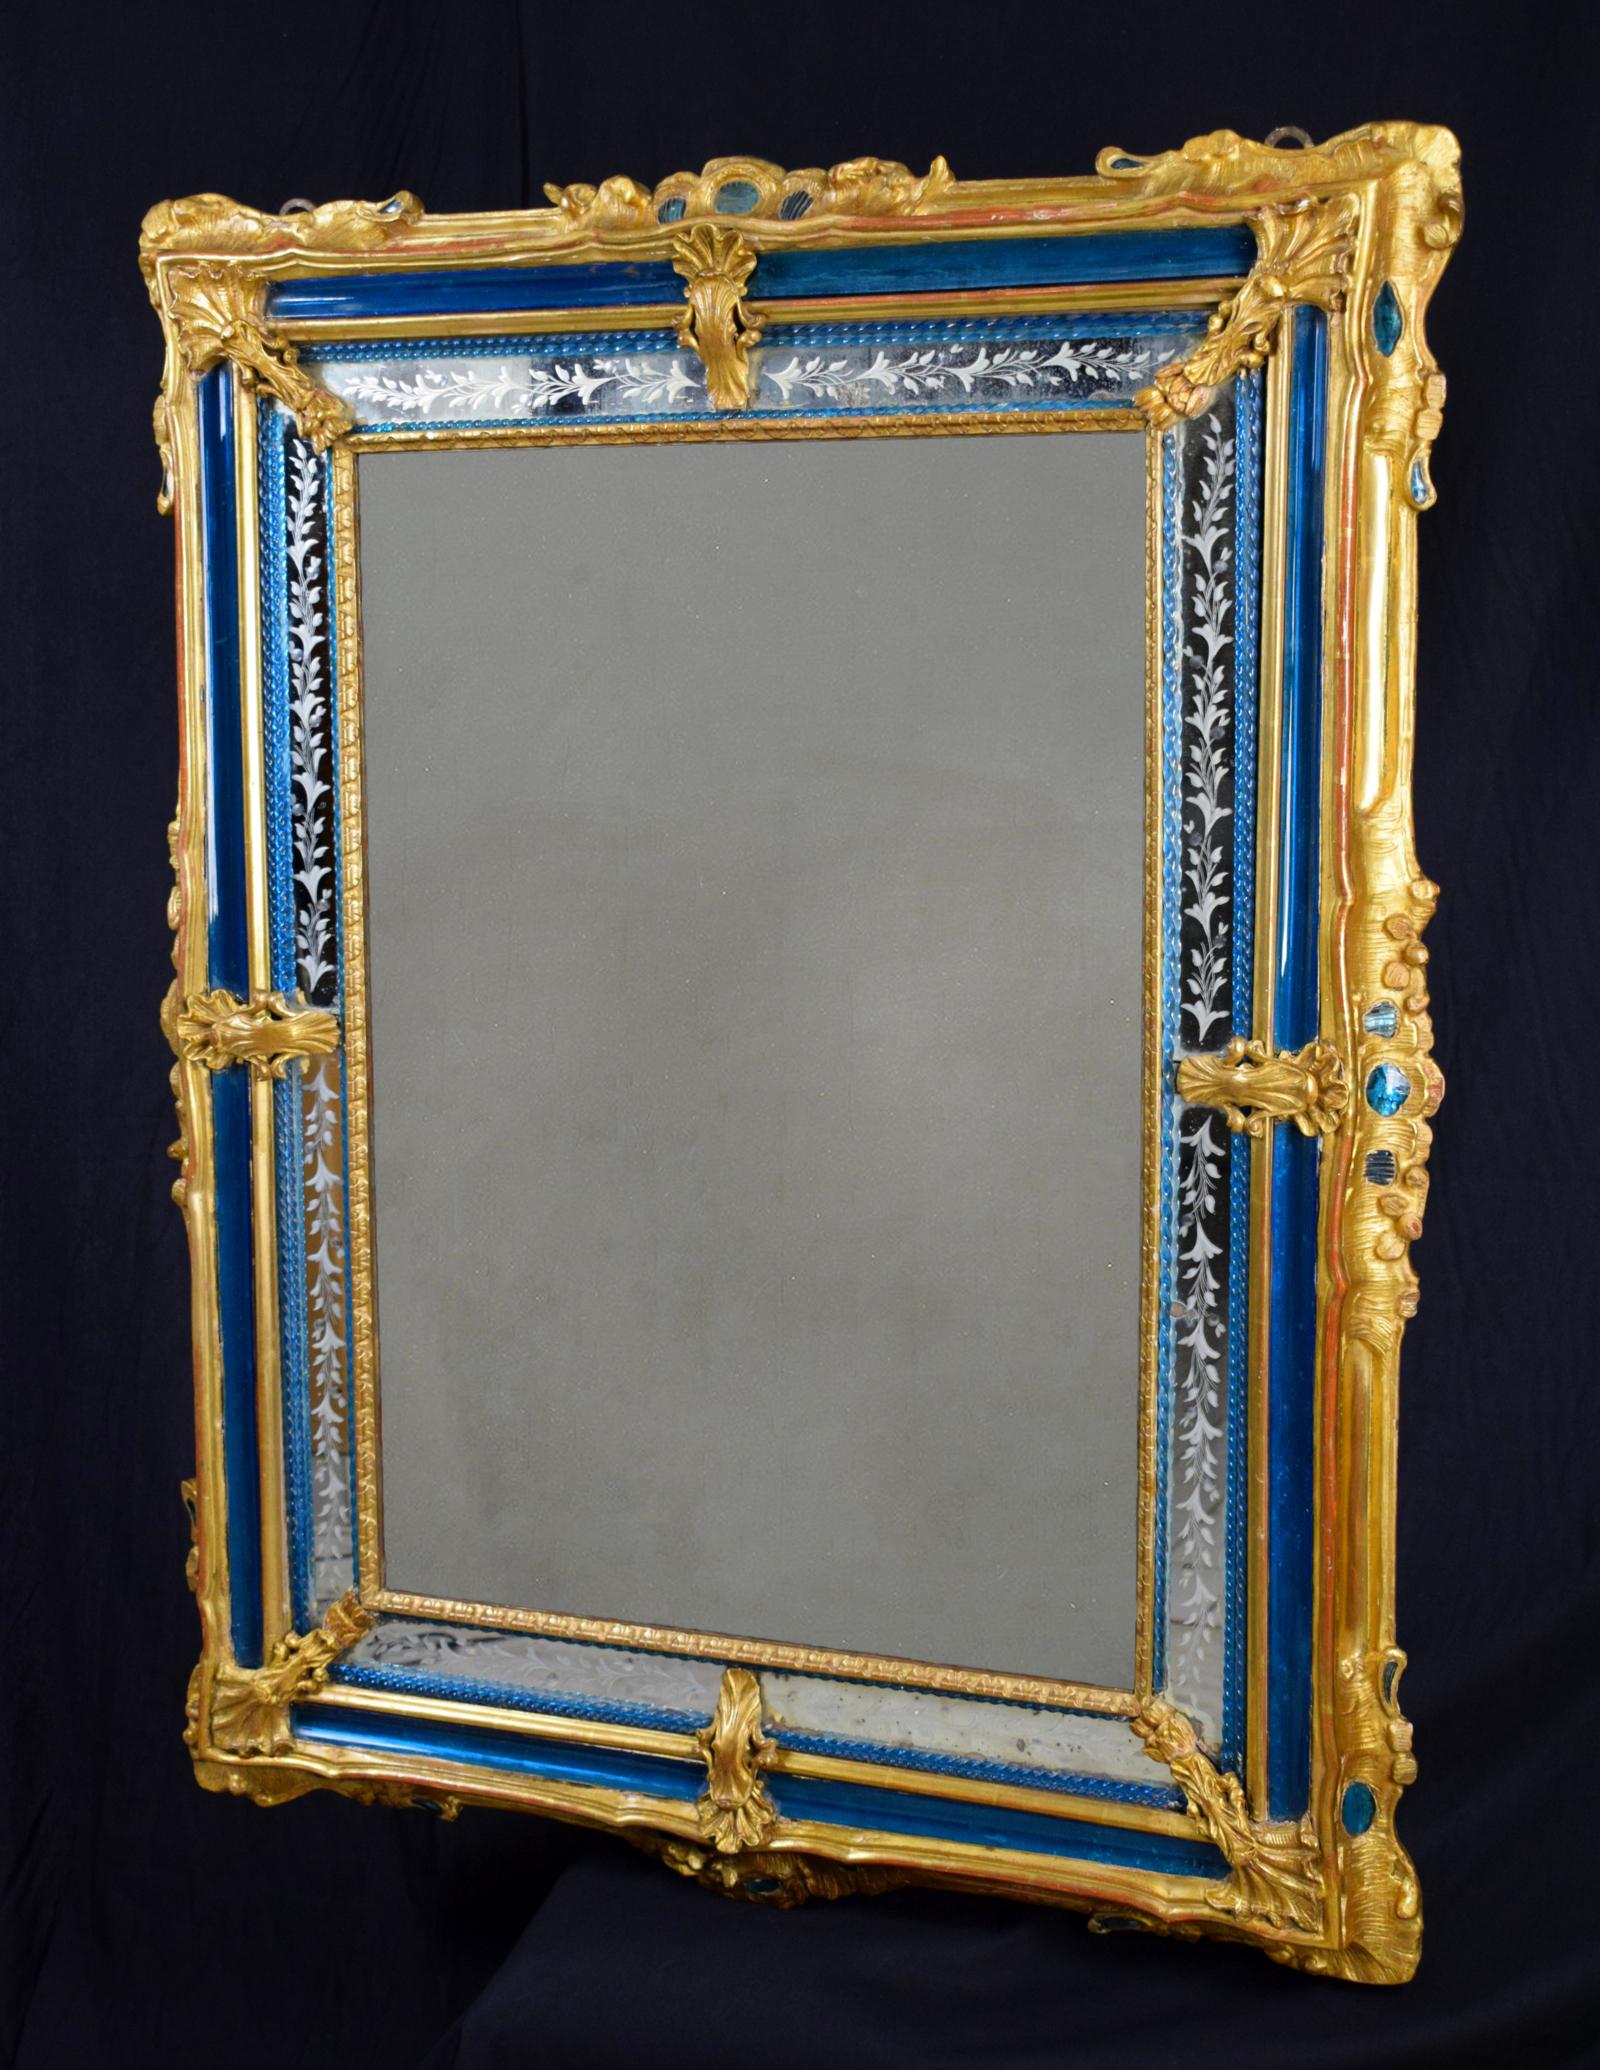 18th Century Rectangular Gilded Wood and Blue Glass Paste Venetian Wall Mirror (Barock)